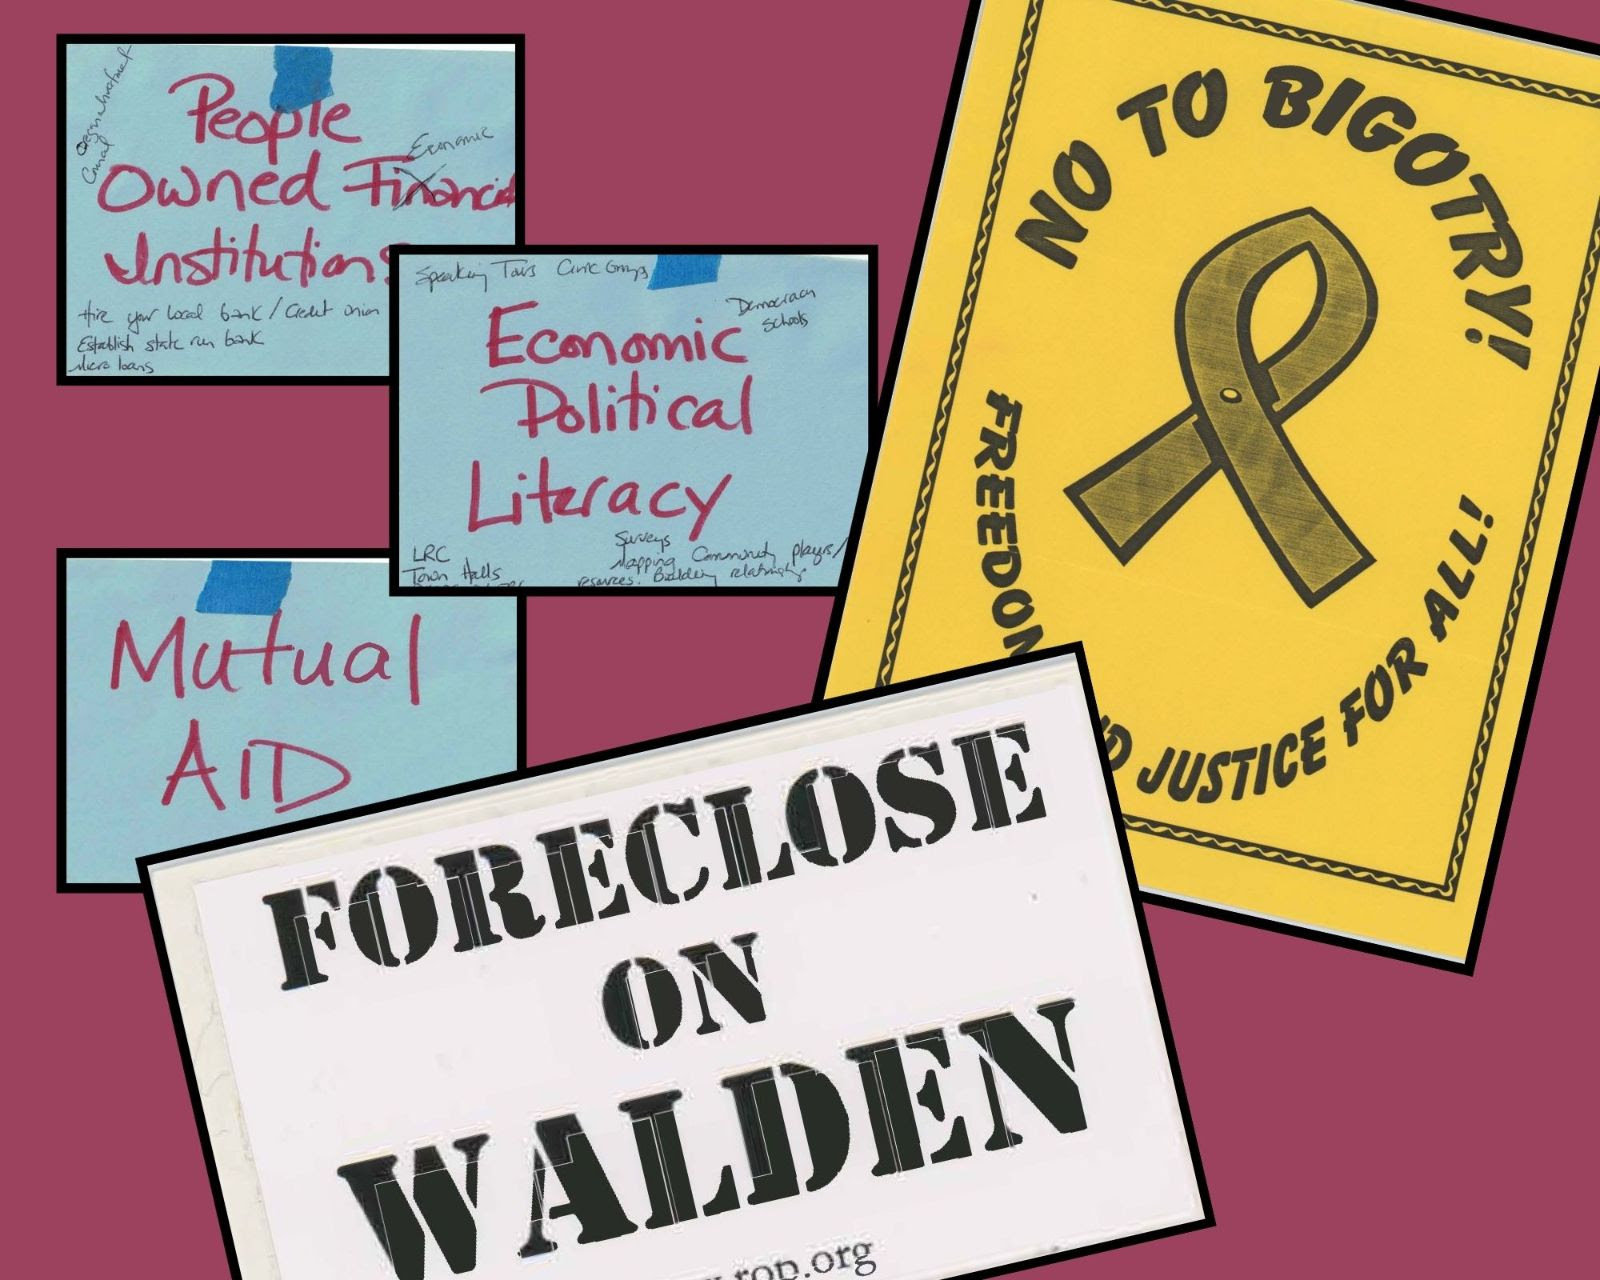 Walden은 금지하고 편협함은 금지라는 표지판